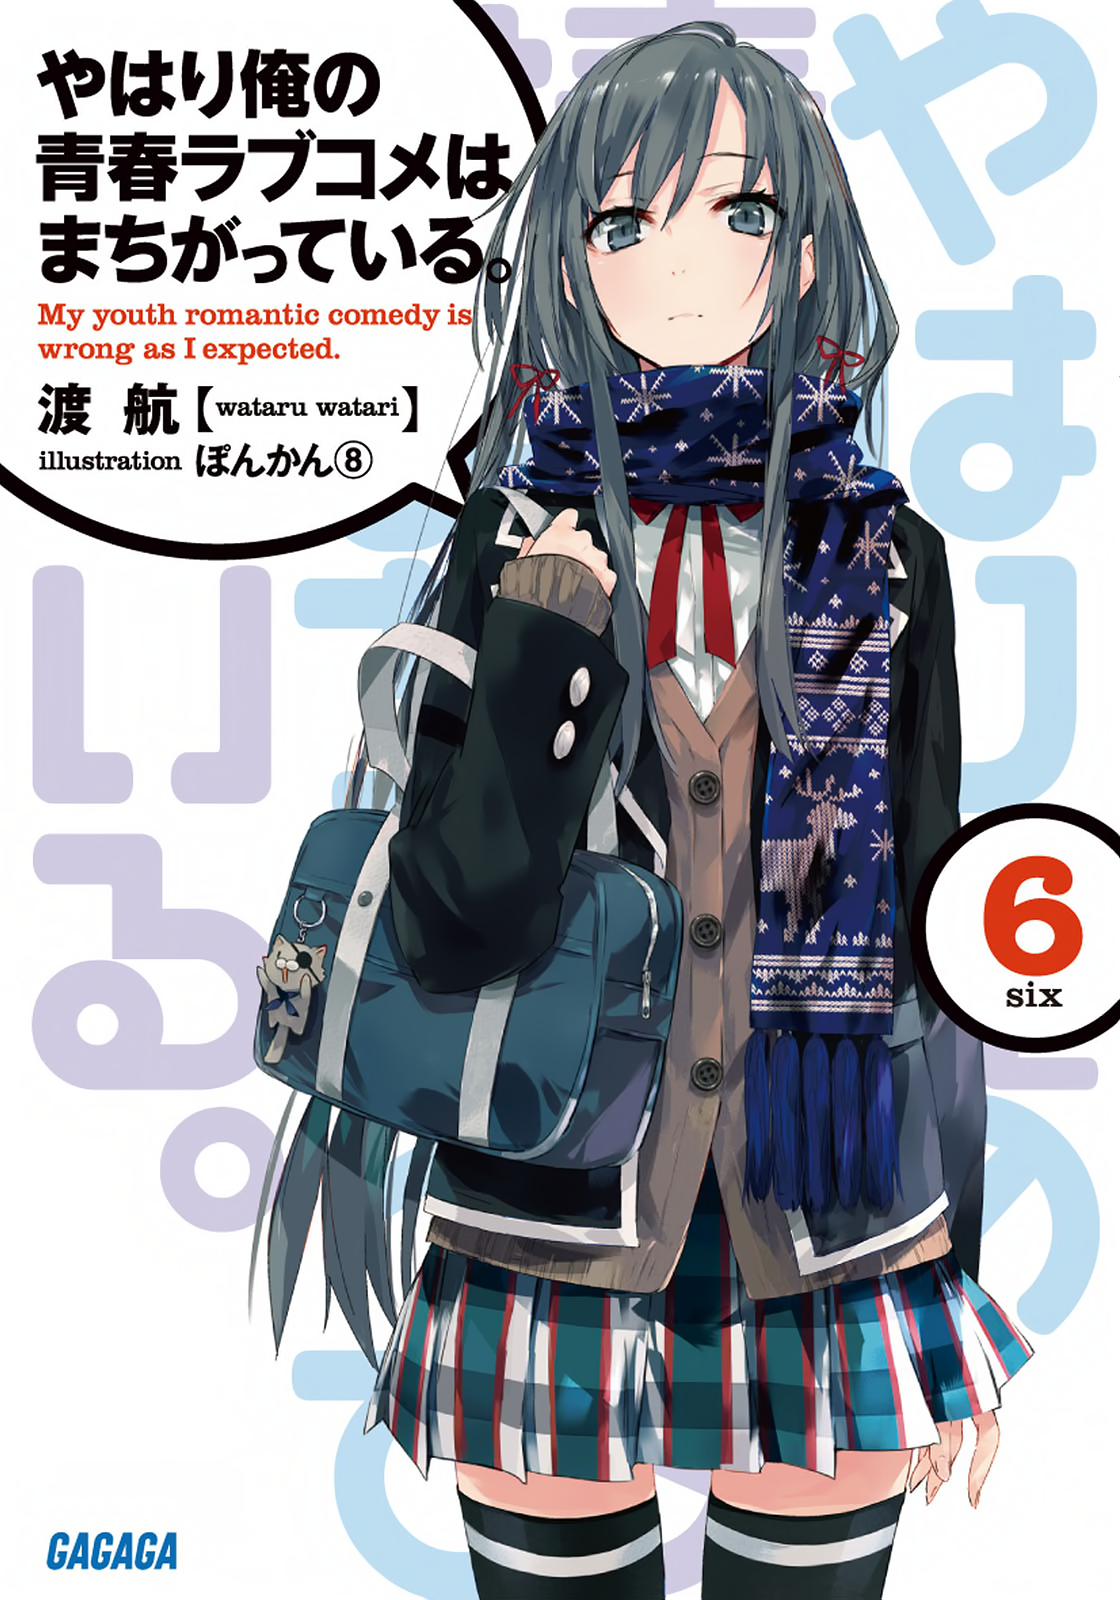 Amusu - Final volume 14 Yahari Ore no Seishun Love Comedy wa Machigatteiru  Light Novel to be released in early 2019!